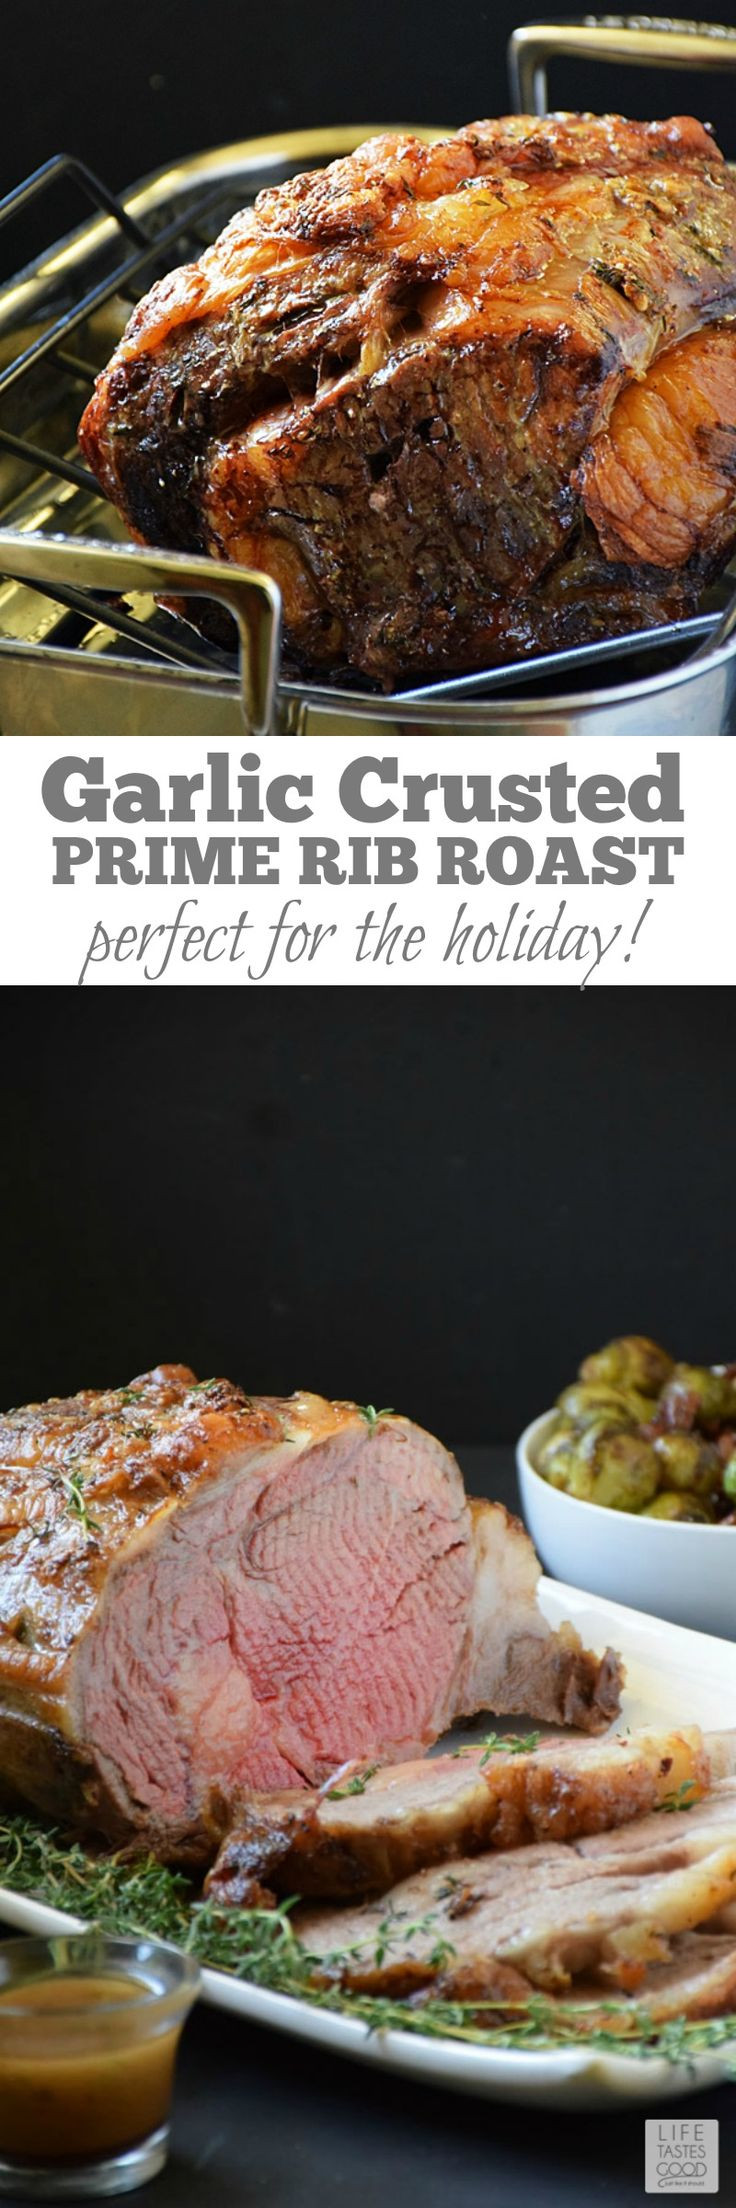 Prime Rib Christmas Dinner Menus
 Best 25 Xmas dinner ideas ideas on Pinterest